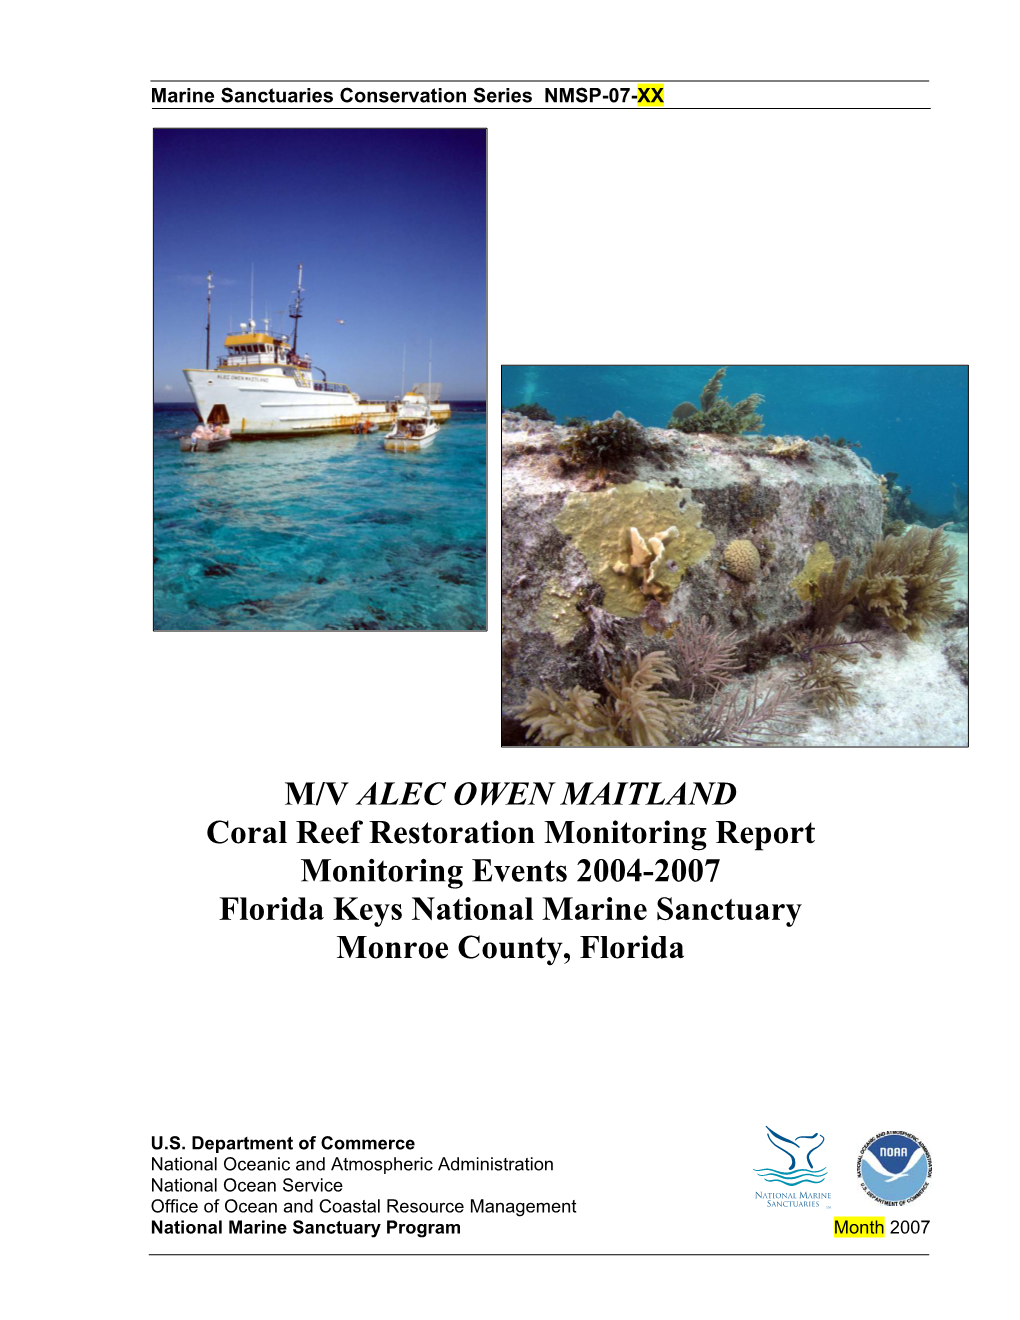 M/V ALEC OWEN MAITLAND Coral Reef Restoration Monitoring Report Monitoring Events 2004-2007 Florida Keys National Marine Sanctuary Monroe County, Florida